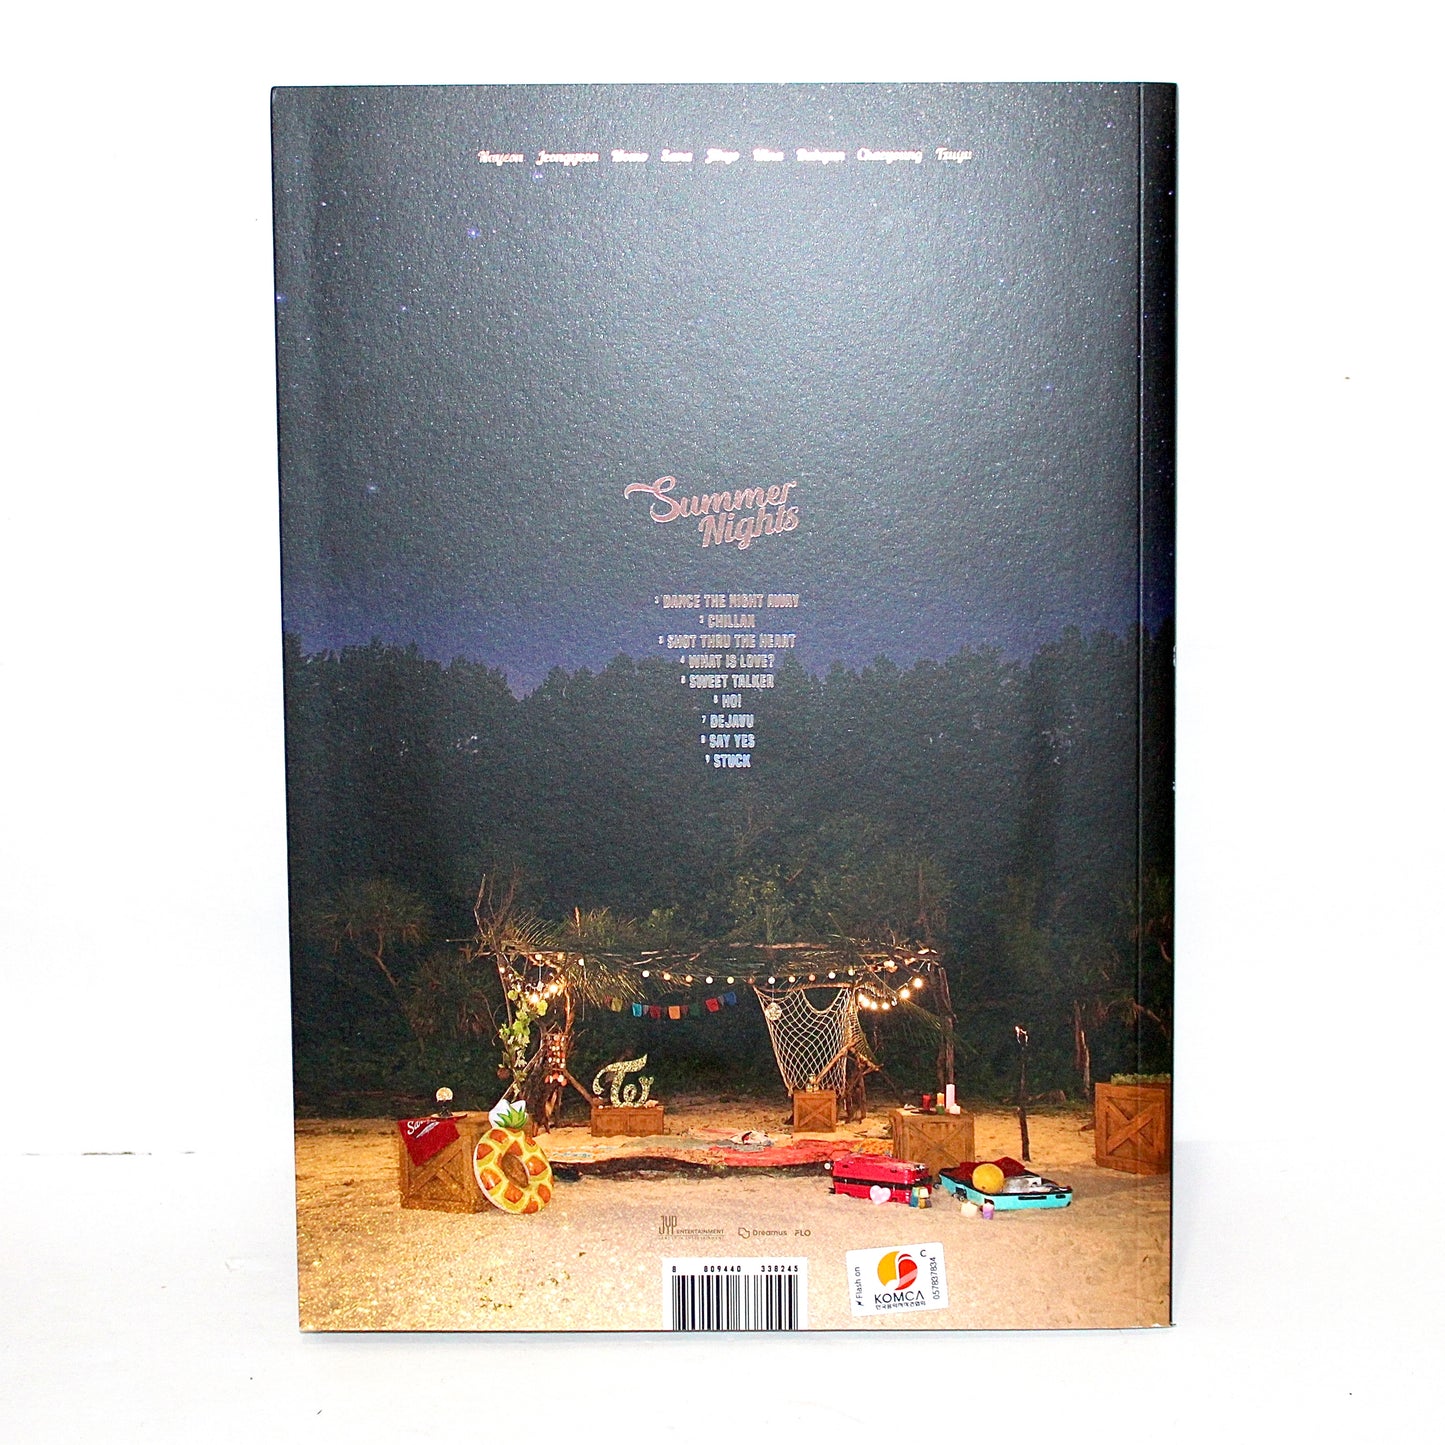 TWICE 2nd Special Album: Summer Nights | C Ver.